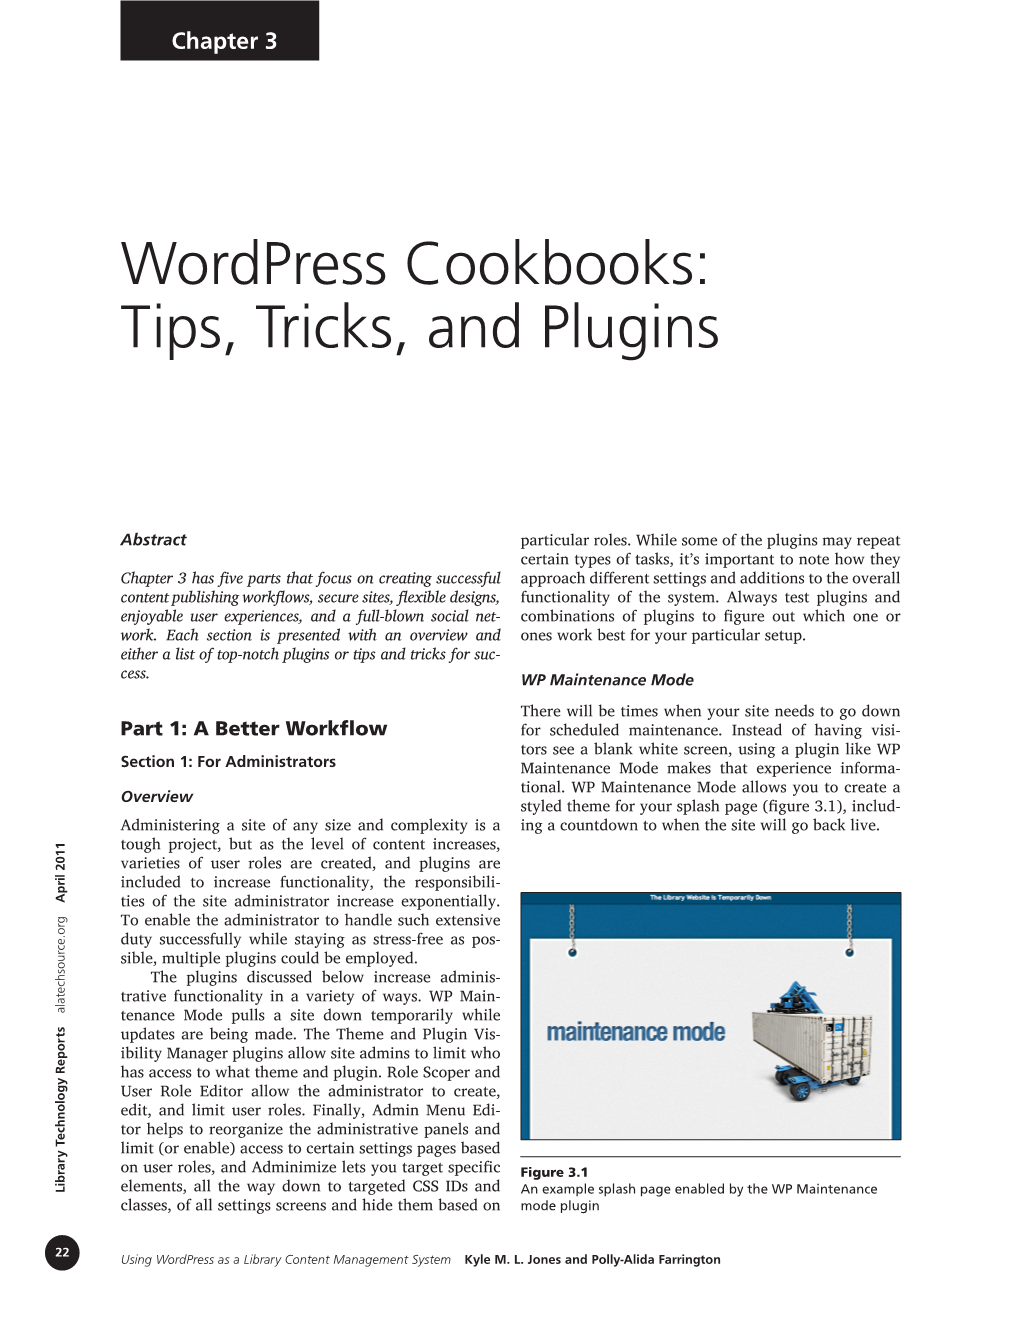 Wordpress Cookbooks: Tips, Tricks, and Plugins